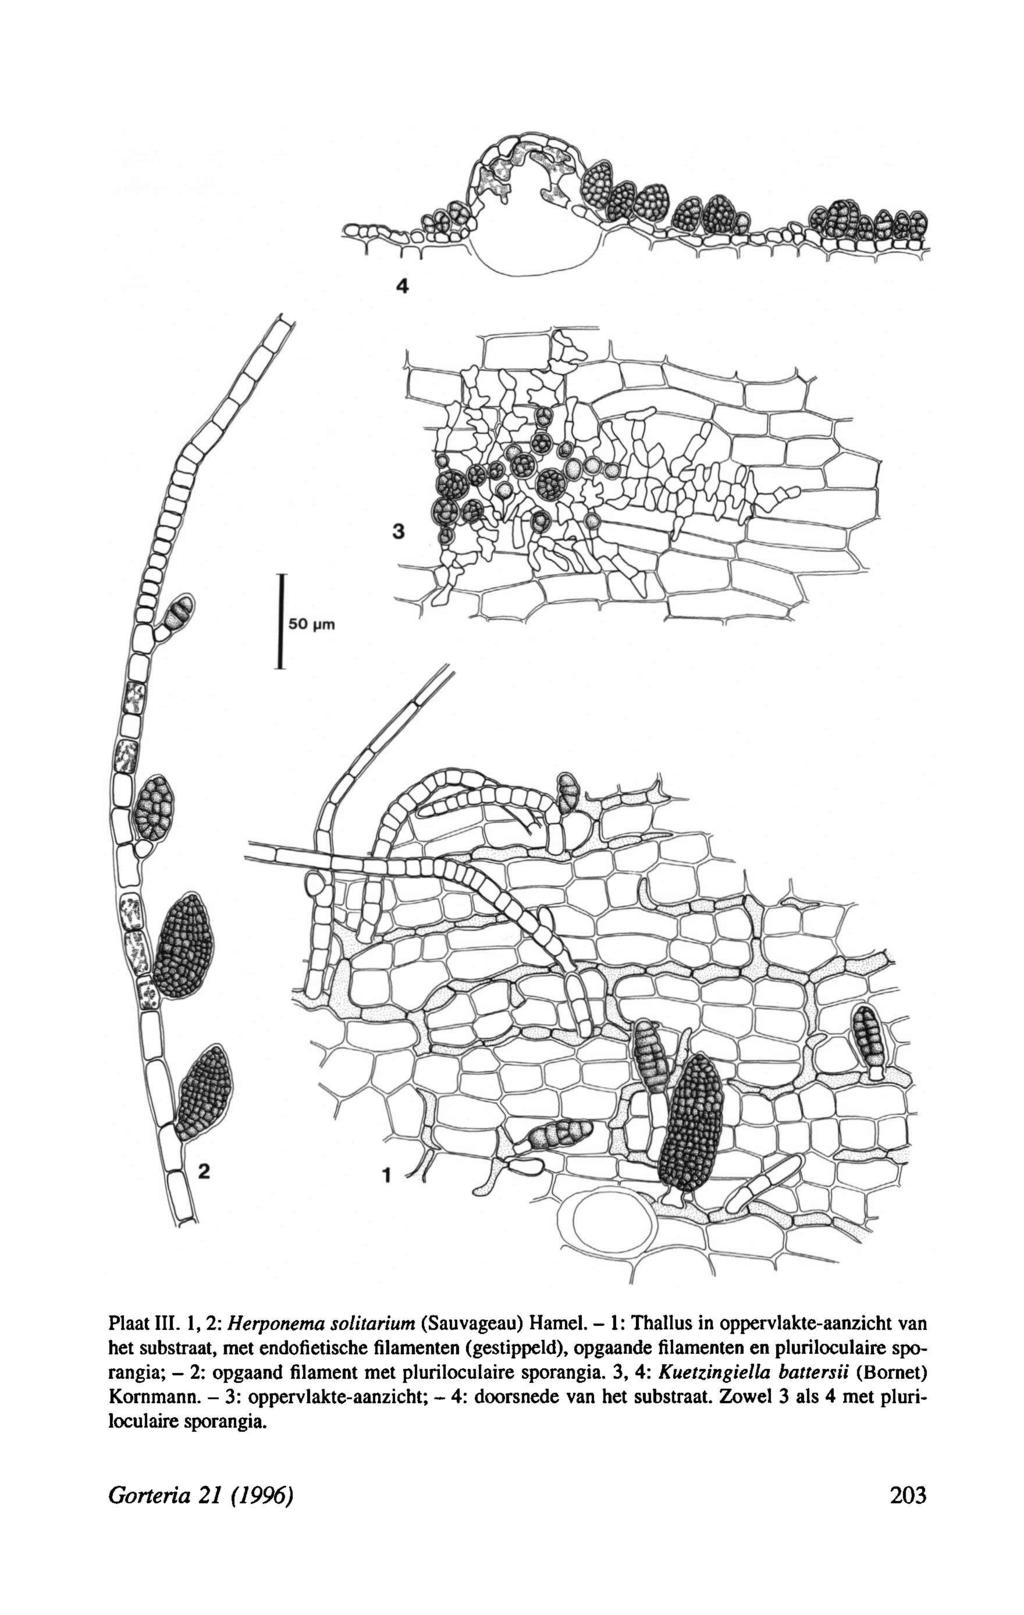 Plaat III. 1, 2: Herponema solitarium (Sauvageau) Hamel.